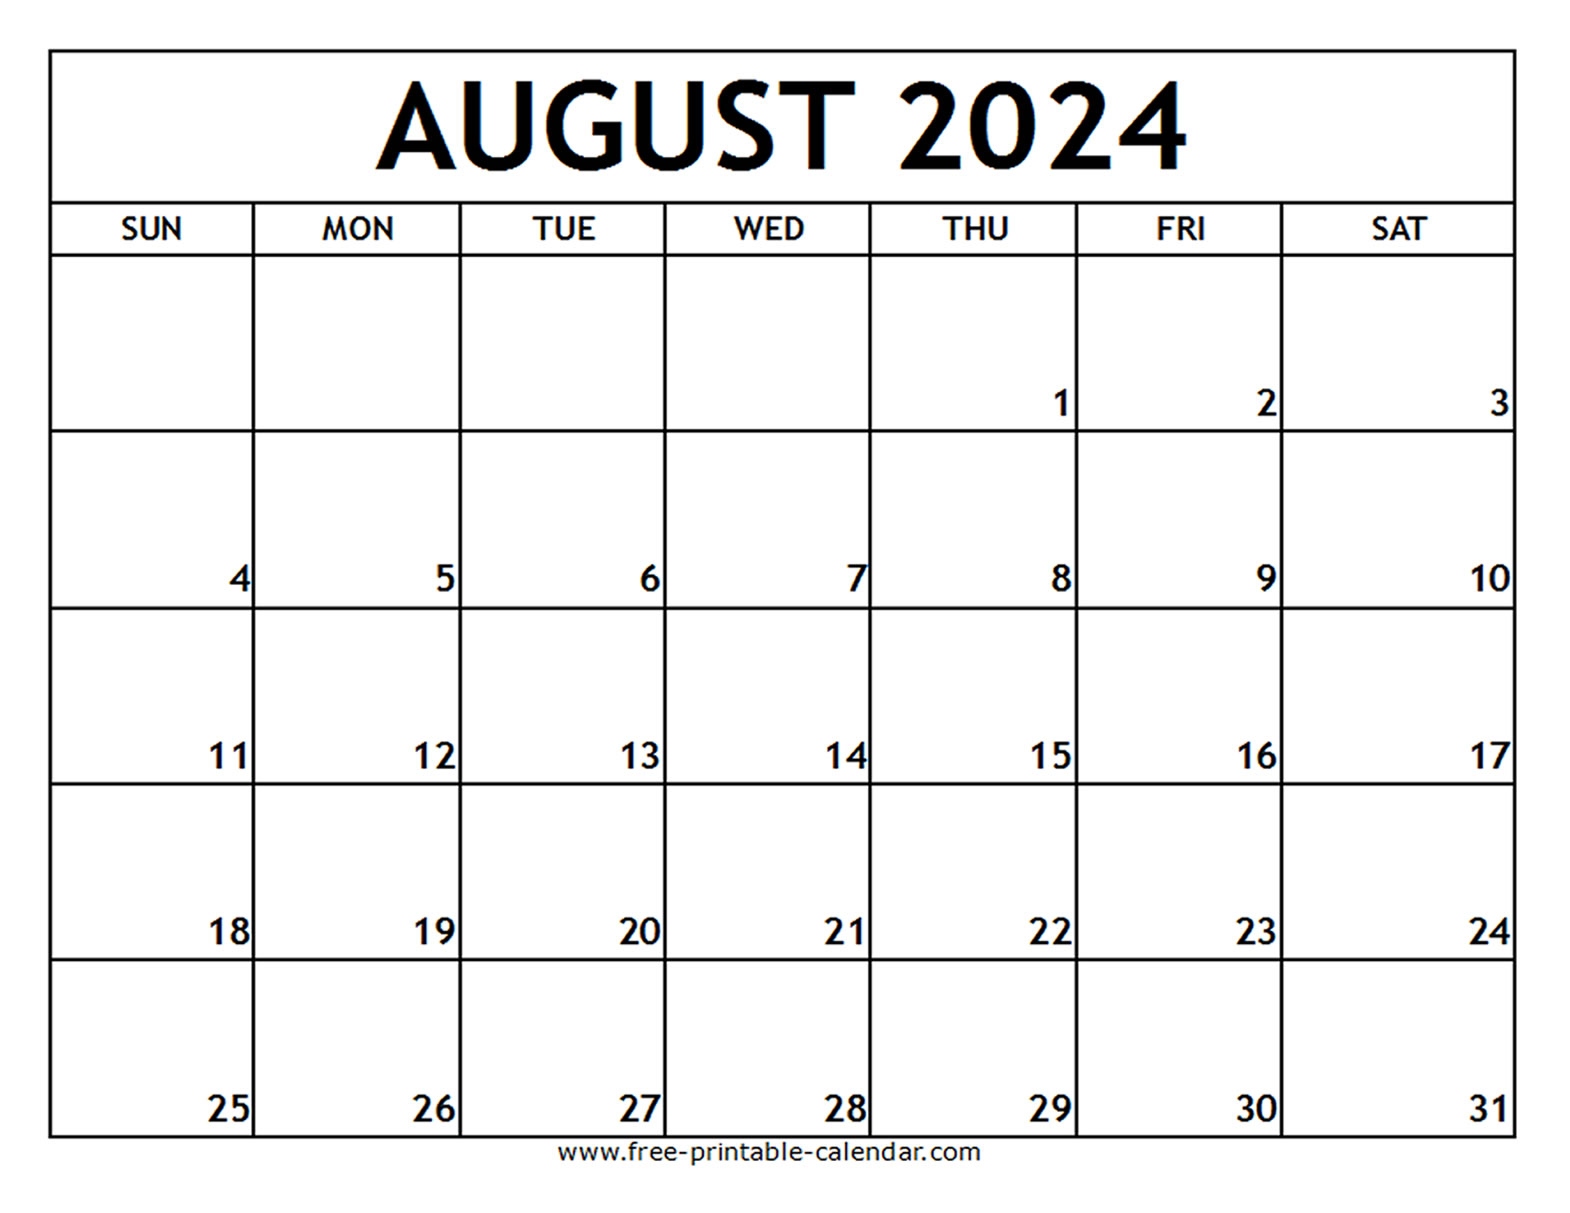 August 2024 Printable Calendar - Free-Printable-Calendar regarding Free Printable August 2024 Calender